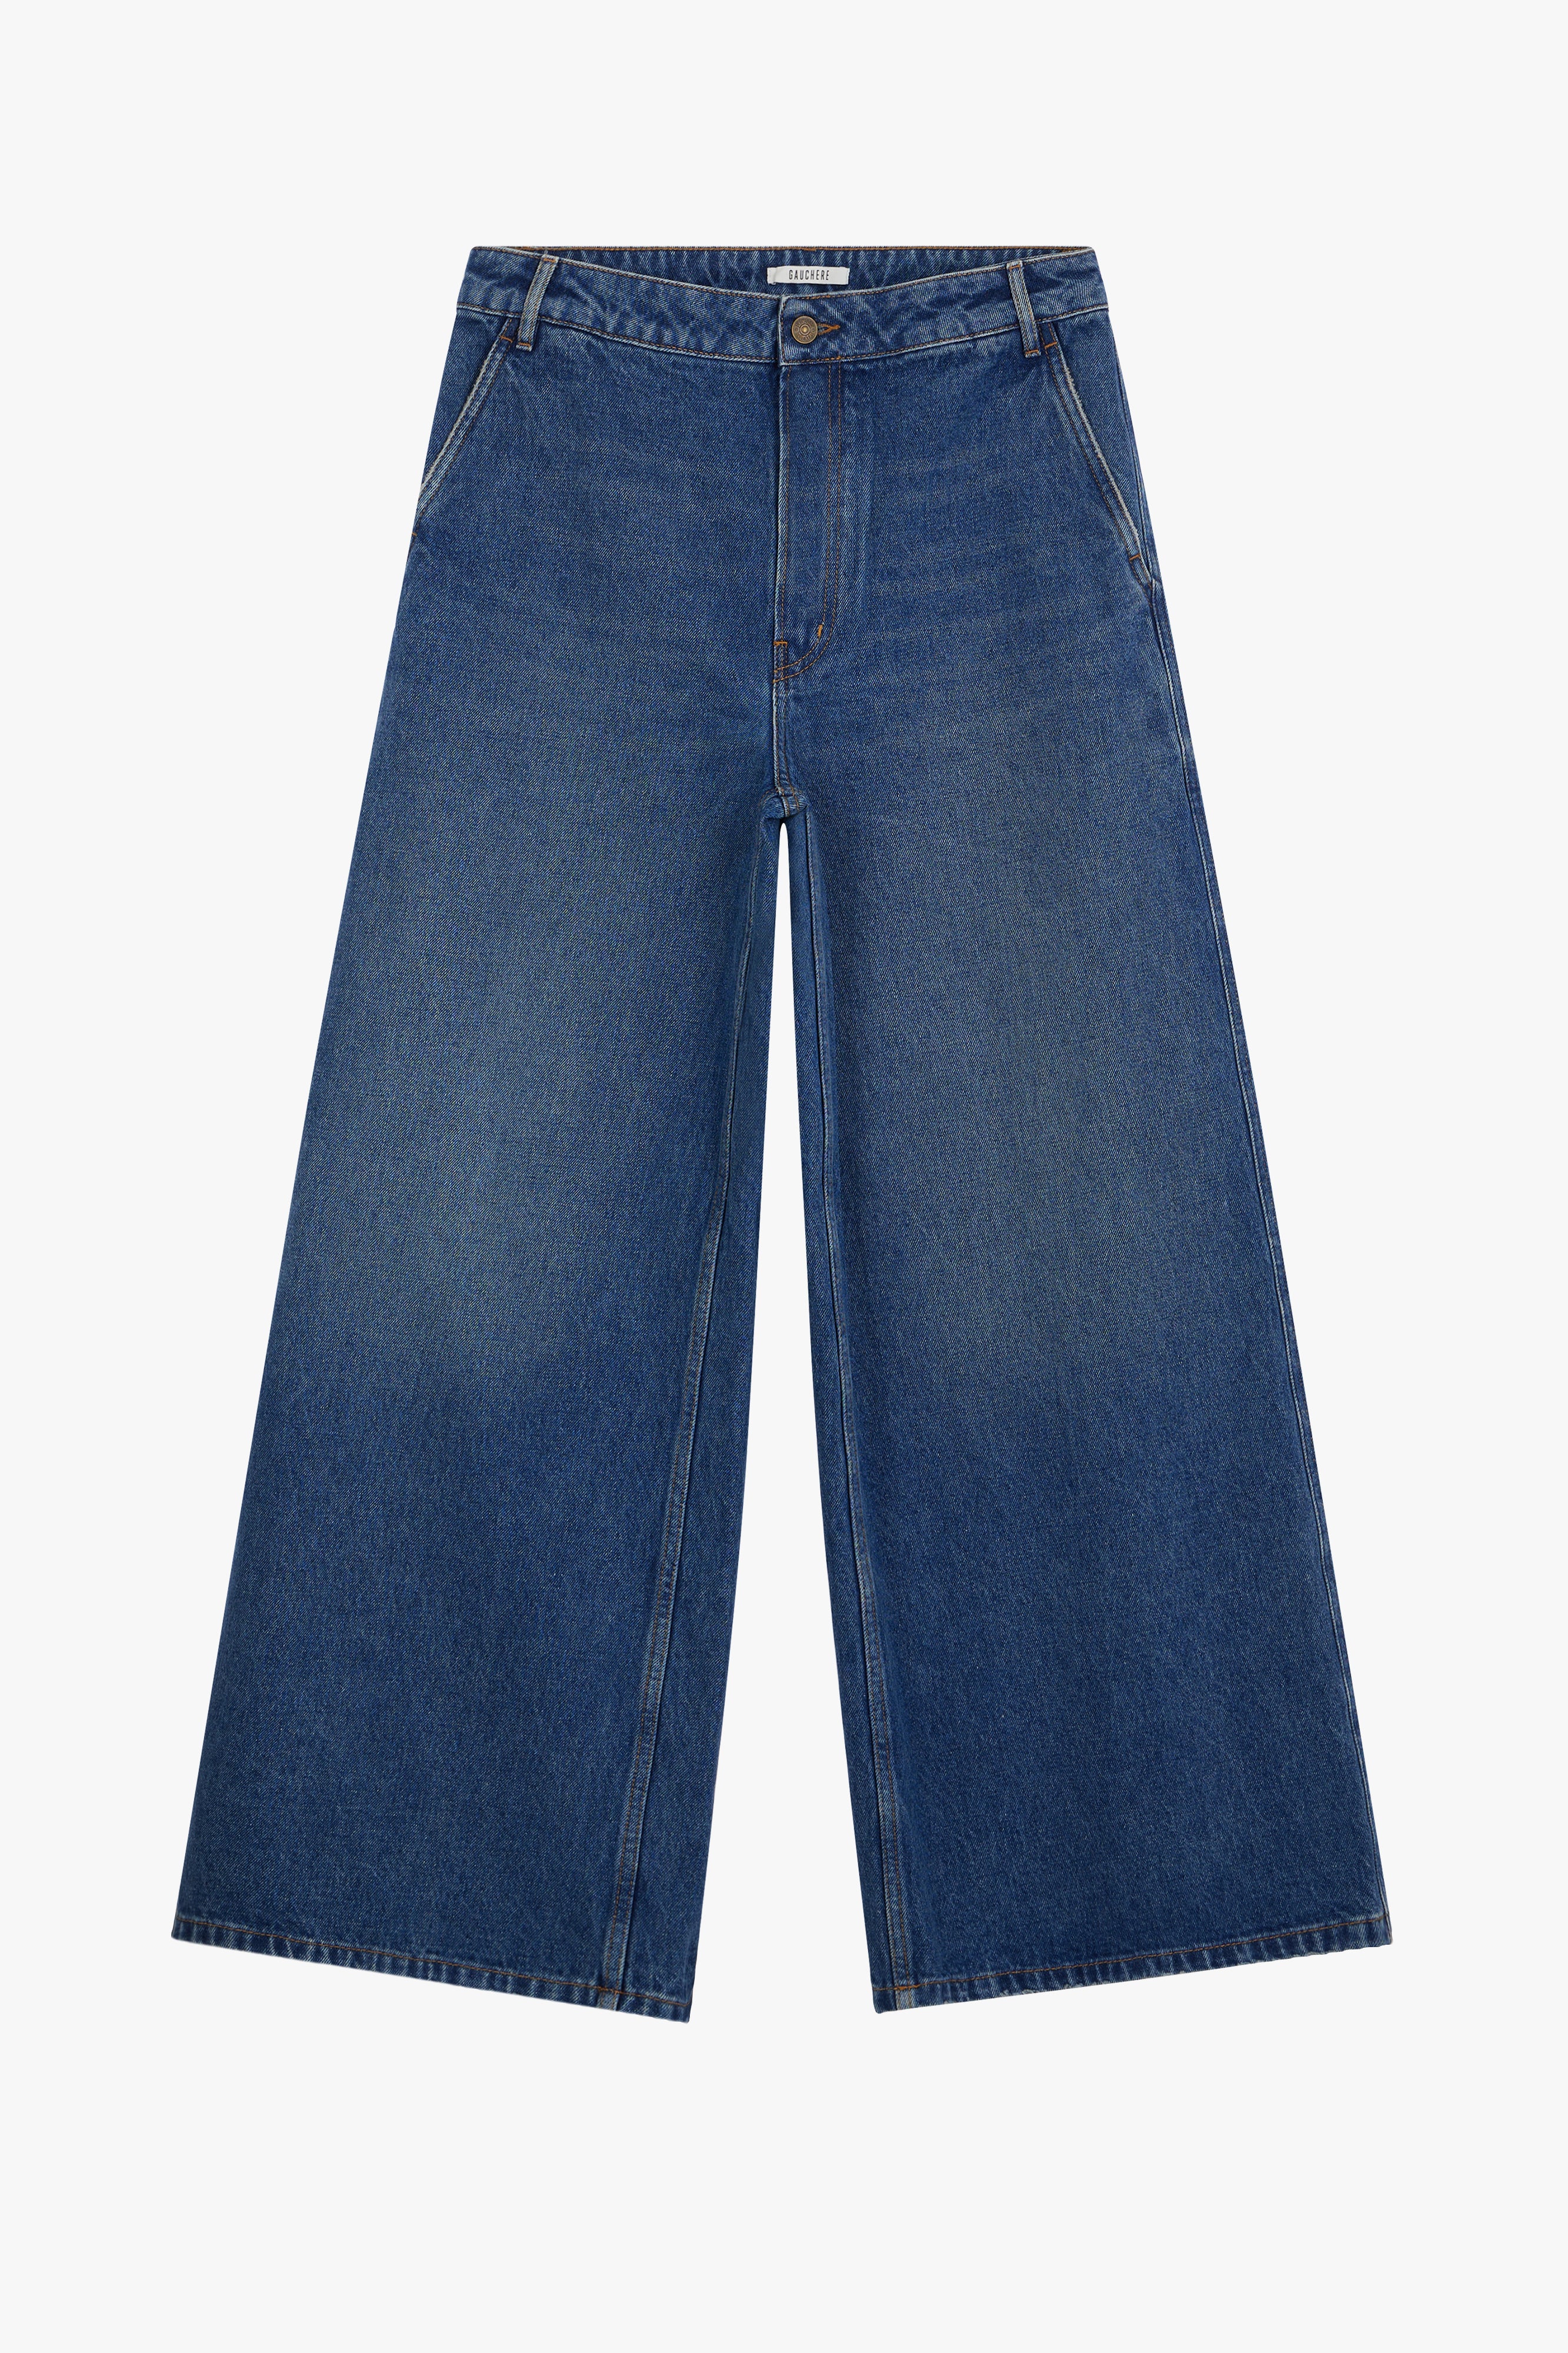 TRICOT Raw Hem Jeans 3/26 Blue Denim 10 Inch Leg Opening (26x27.5)